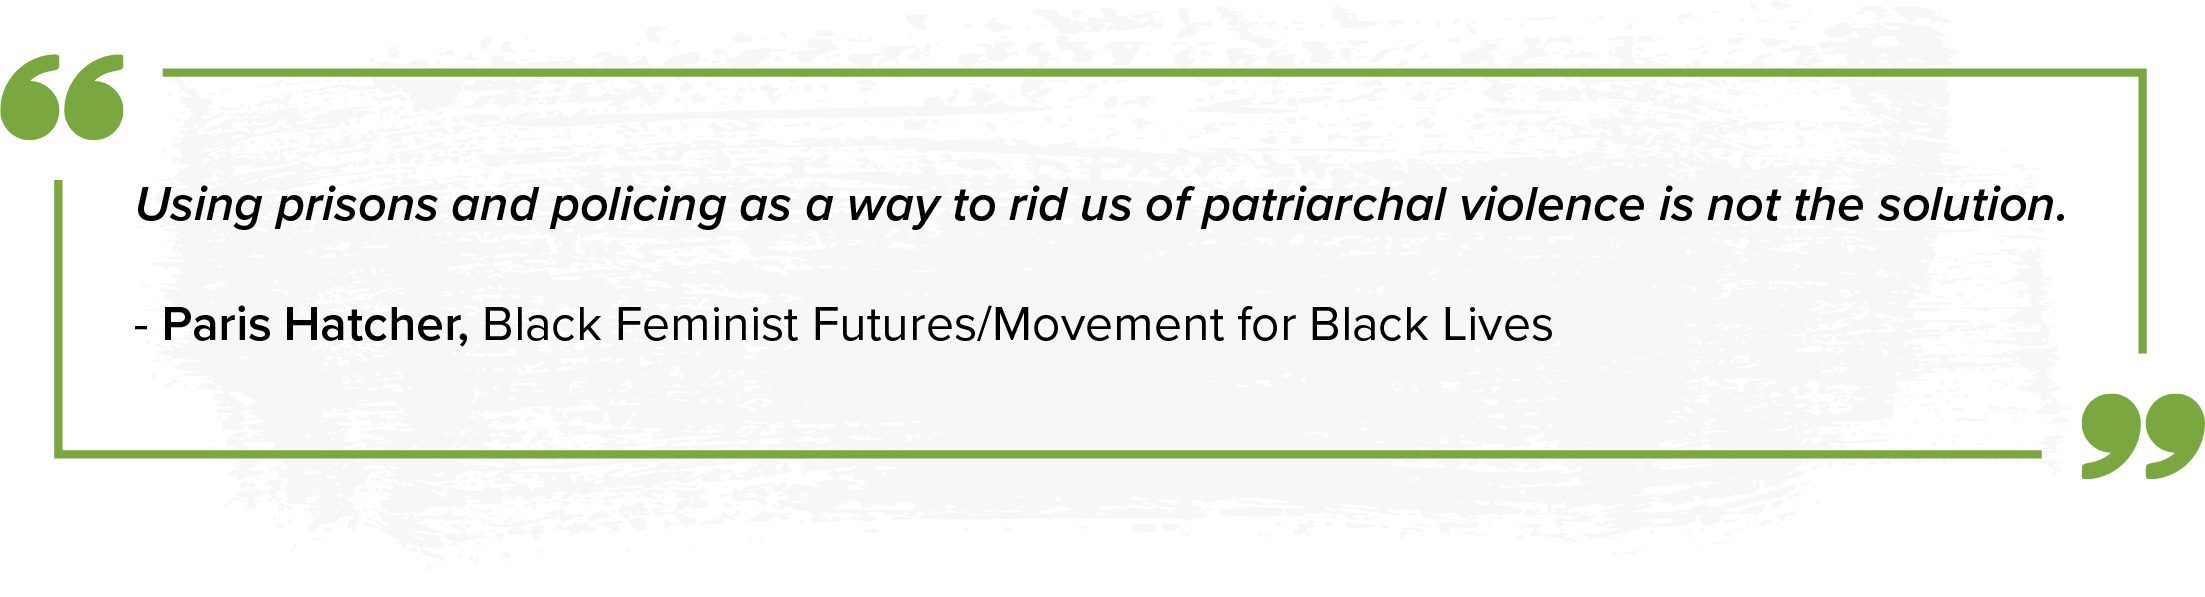 Quote from Paris hatcher, Black Feminist Futures/Movement for Black Lives